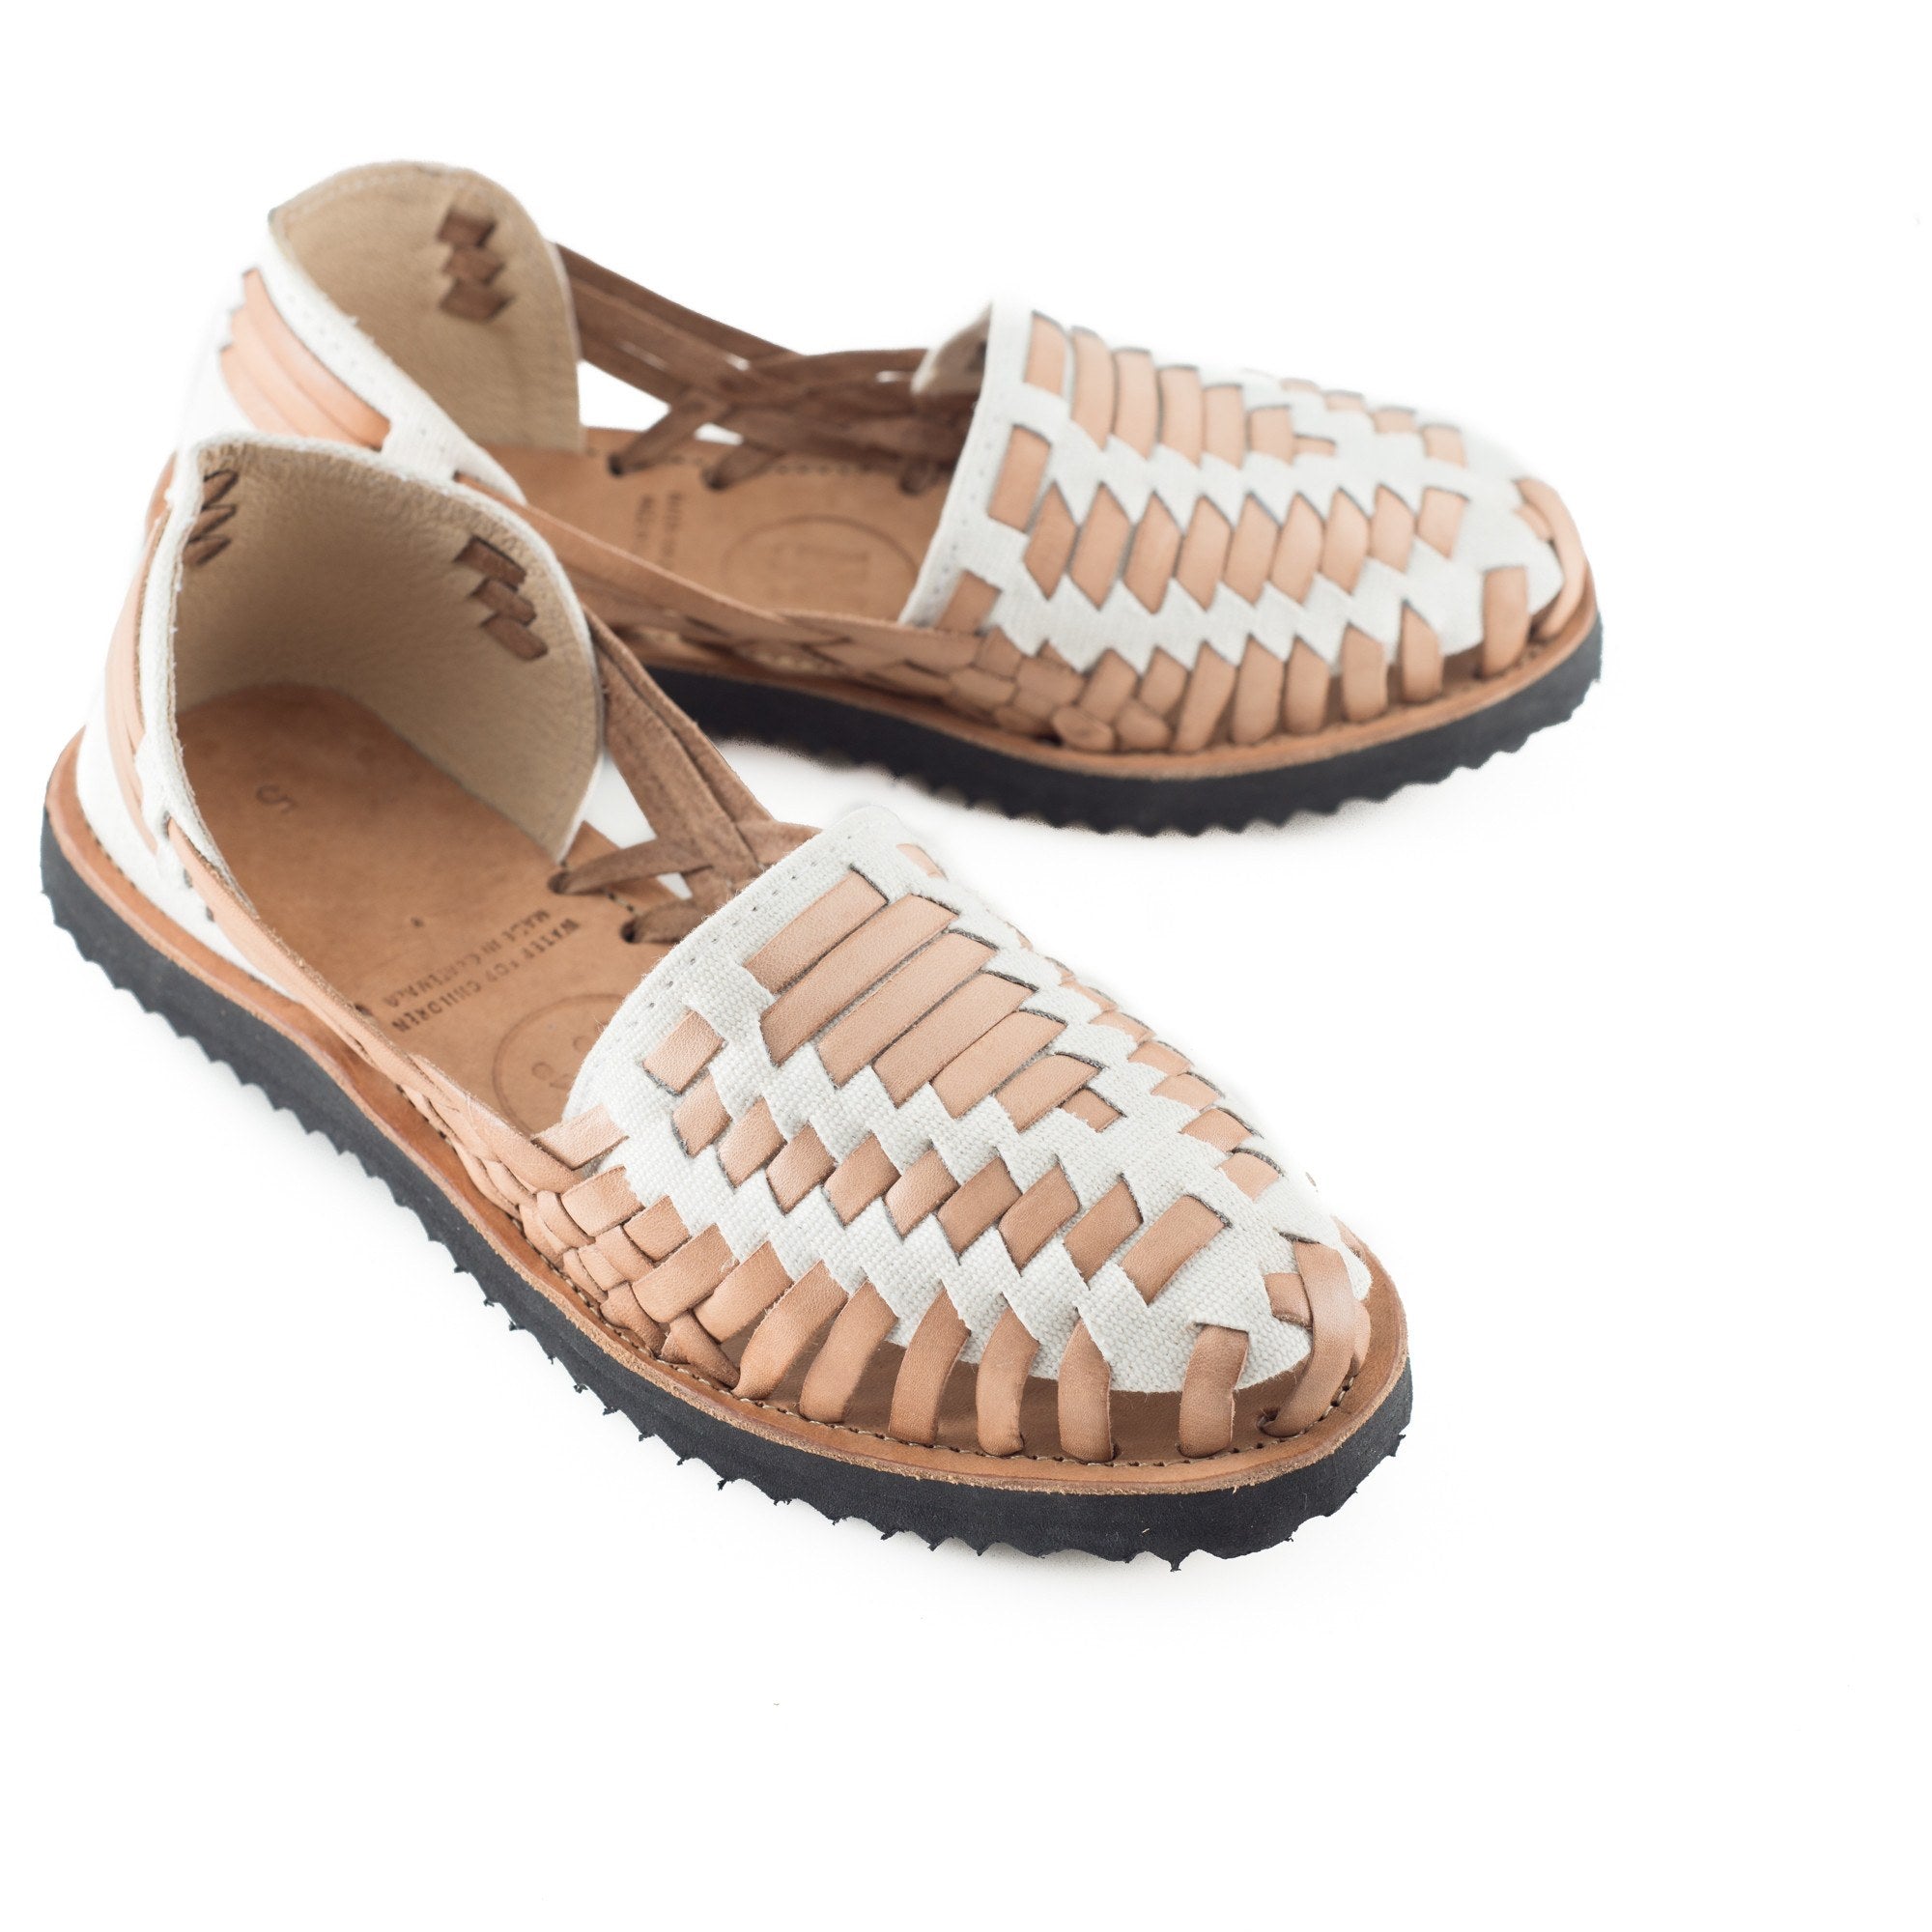 ix style huarache sandals